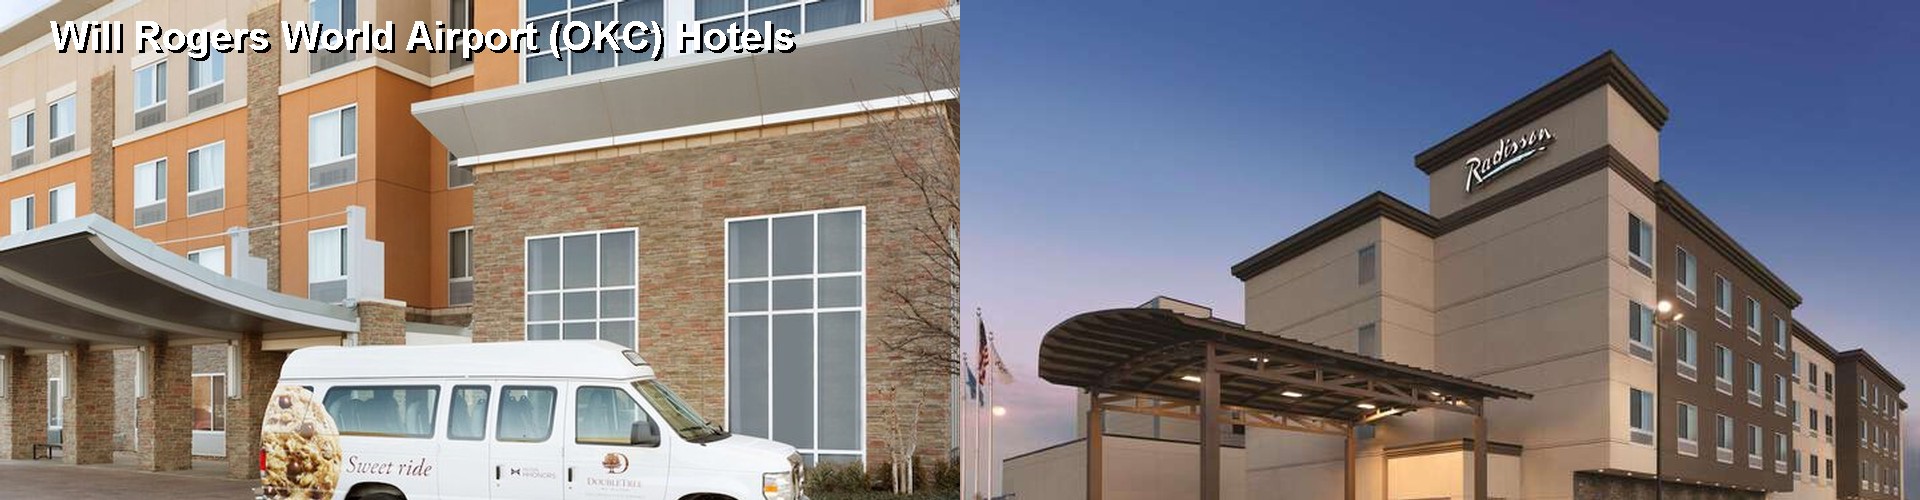 4 Best Hotels near Will Rogers World Airport (OKC)